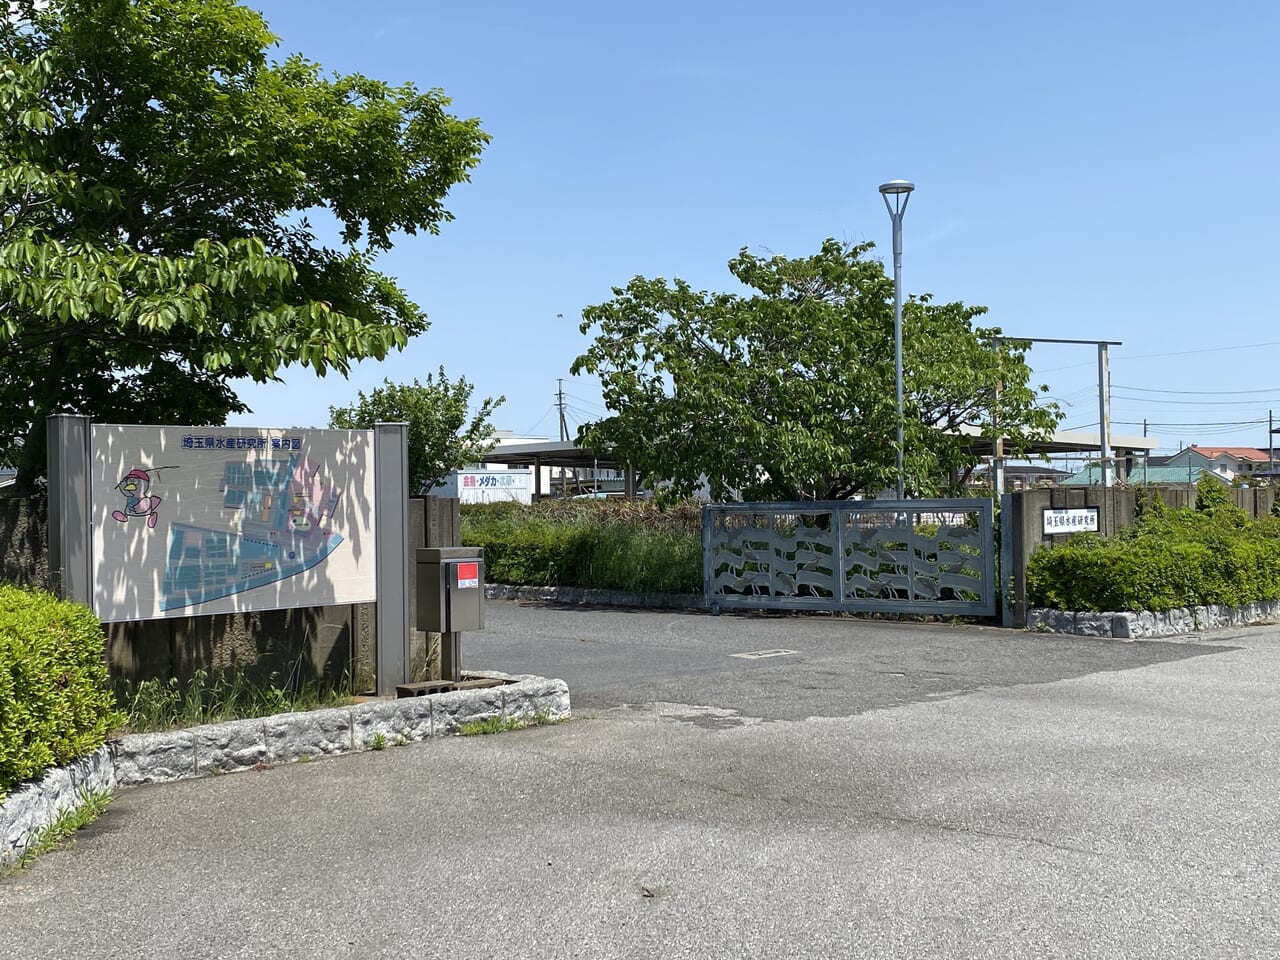 埼玉県養殖漁業協同組合がある埼玉県水産研究所の門